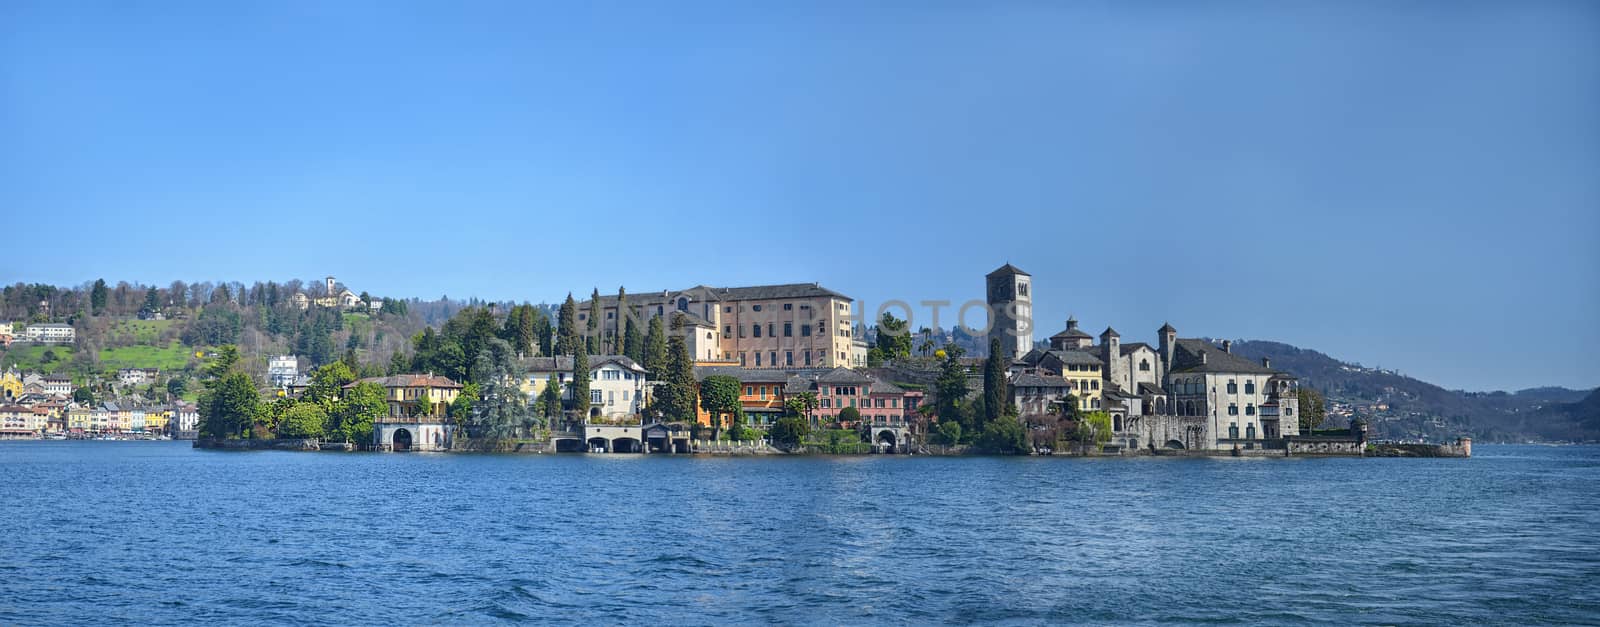 Panorama view of San Giulio island on Lake Orta in Italy by artofphoto